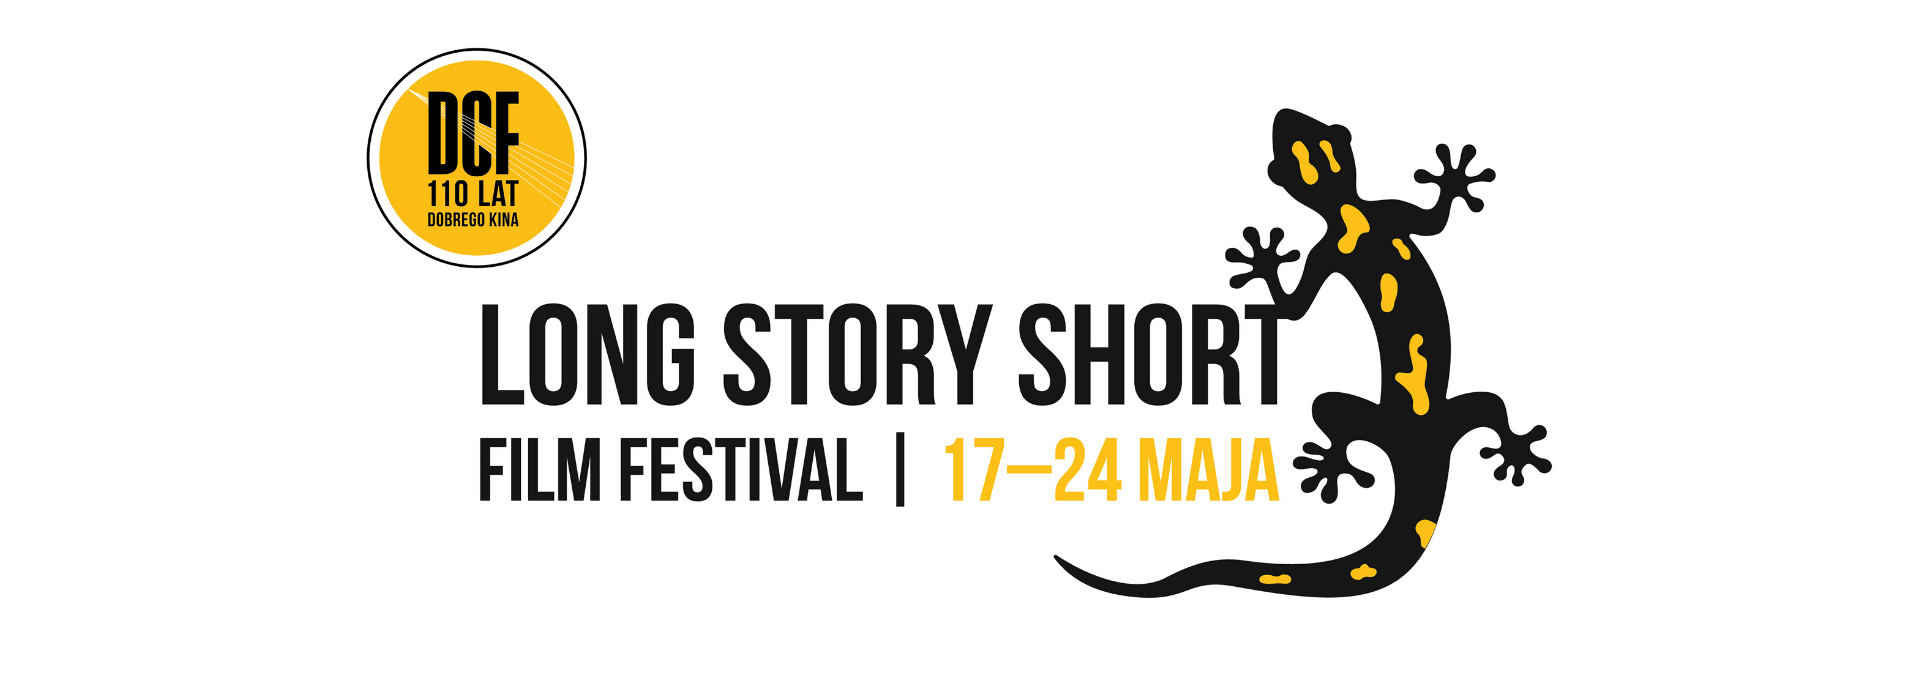 Shortfilm festival 2020